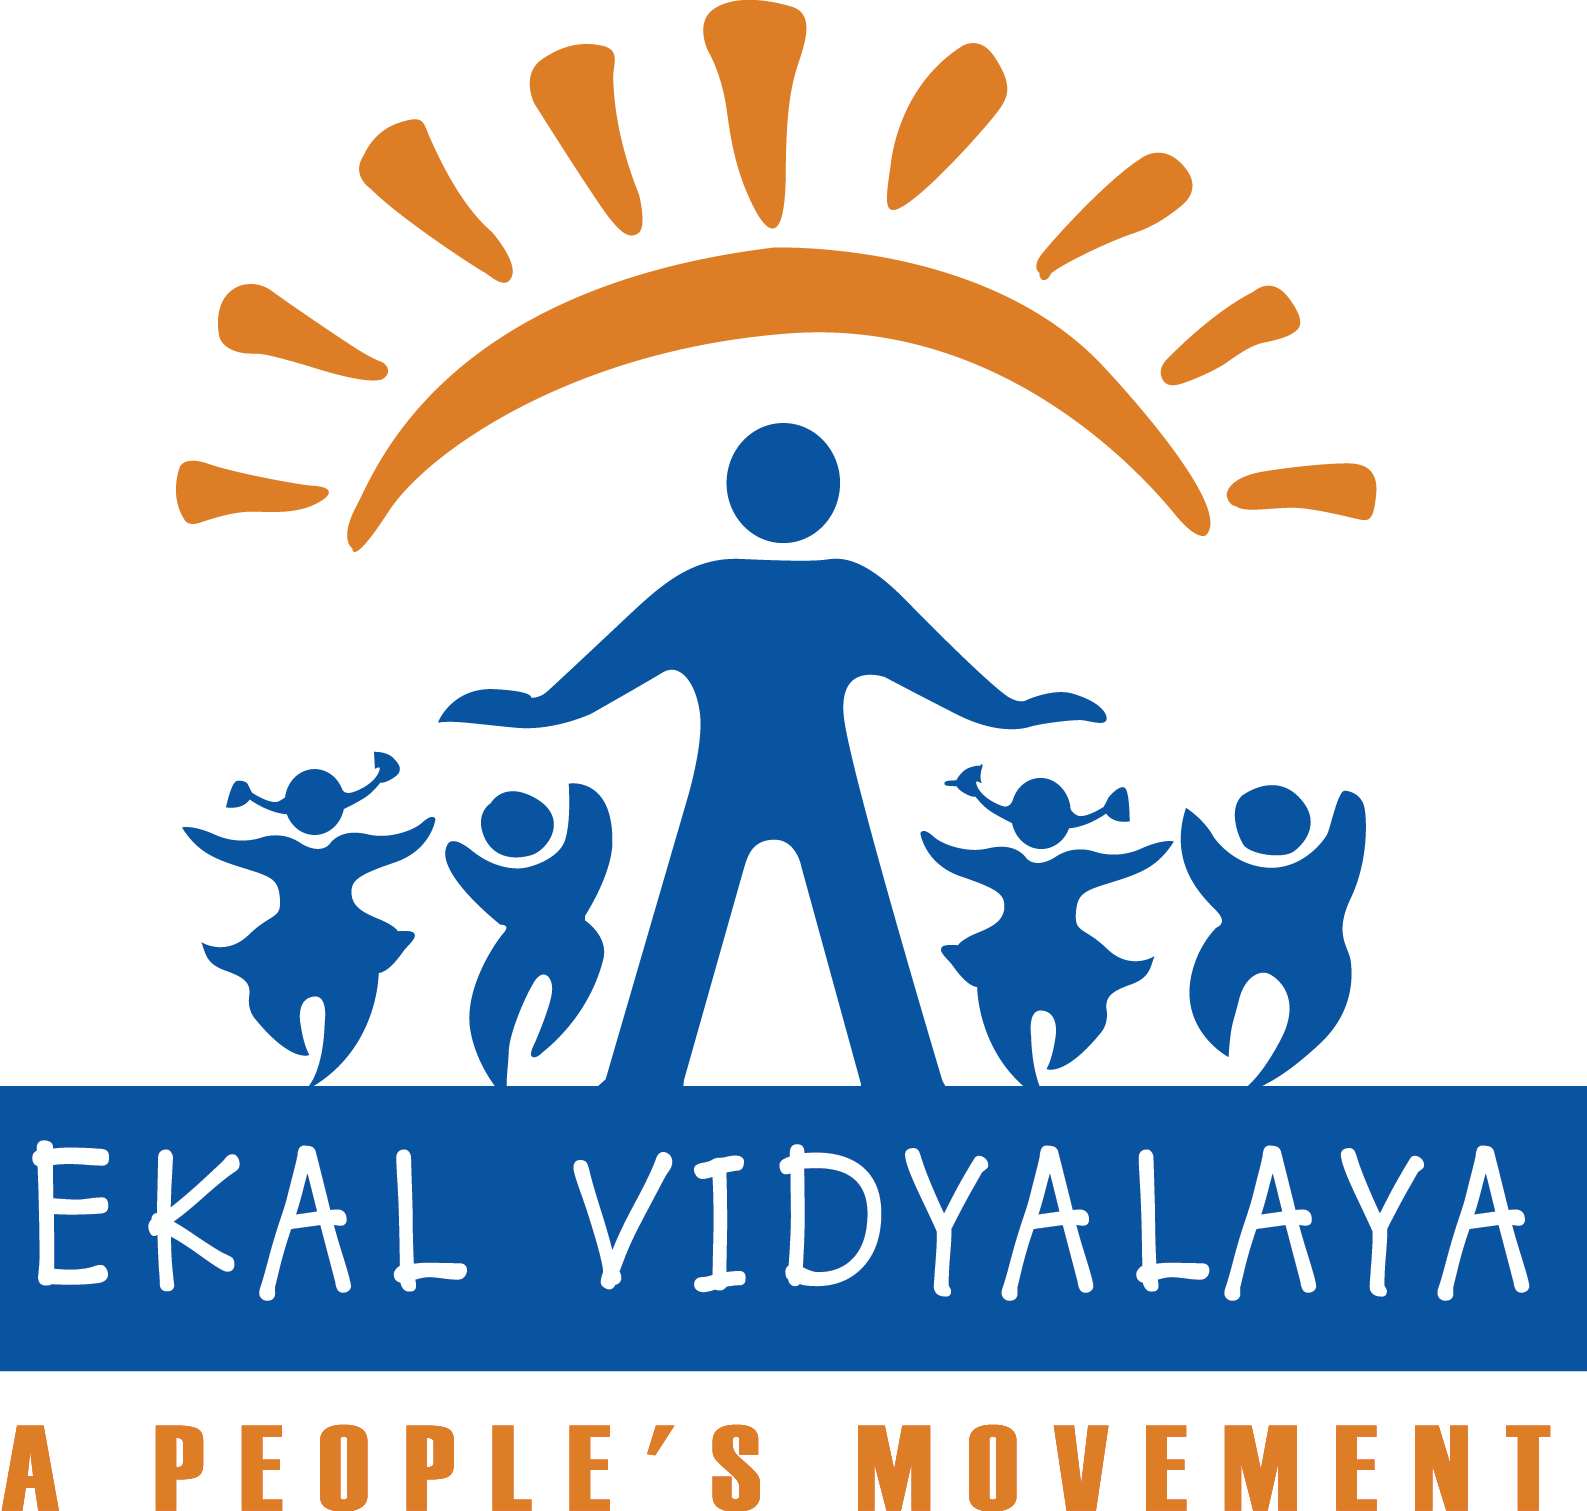 Planned Giving - Ekal Vidyalaya Foundation of USA Inc